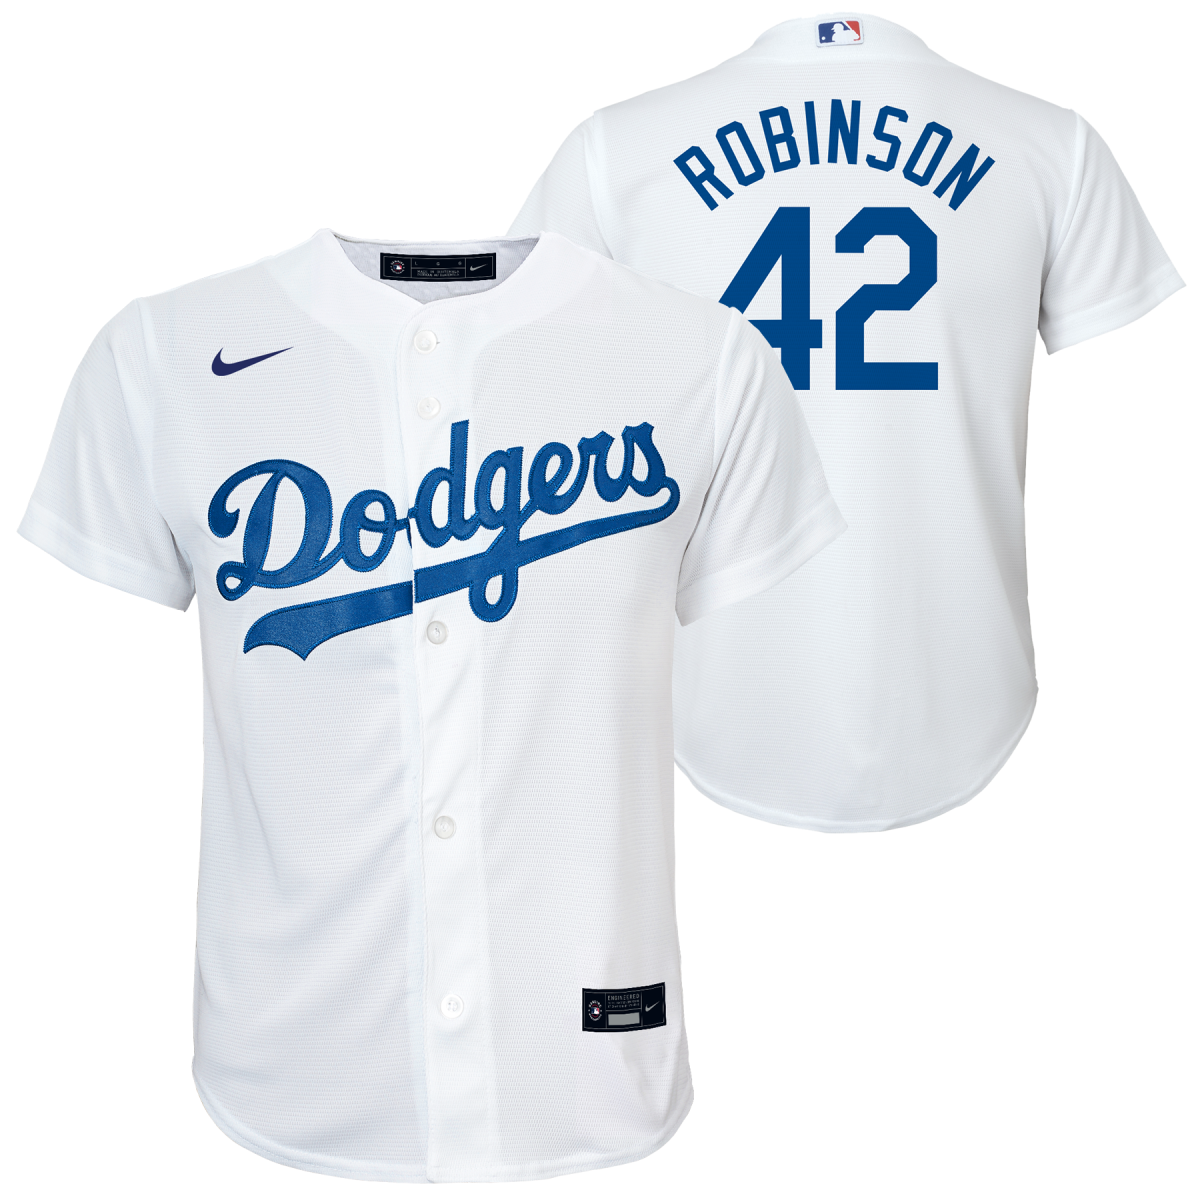 Lids Los Angeles Dodgers Nike Jackie Robinson Day Team 42 T-Shirt